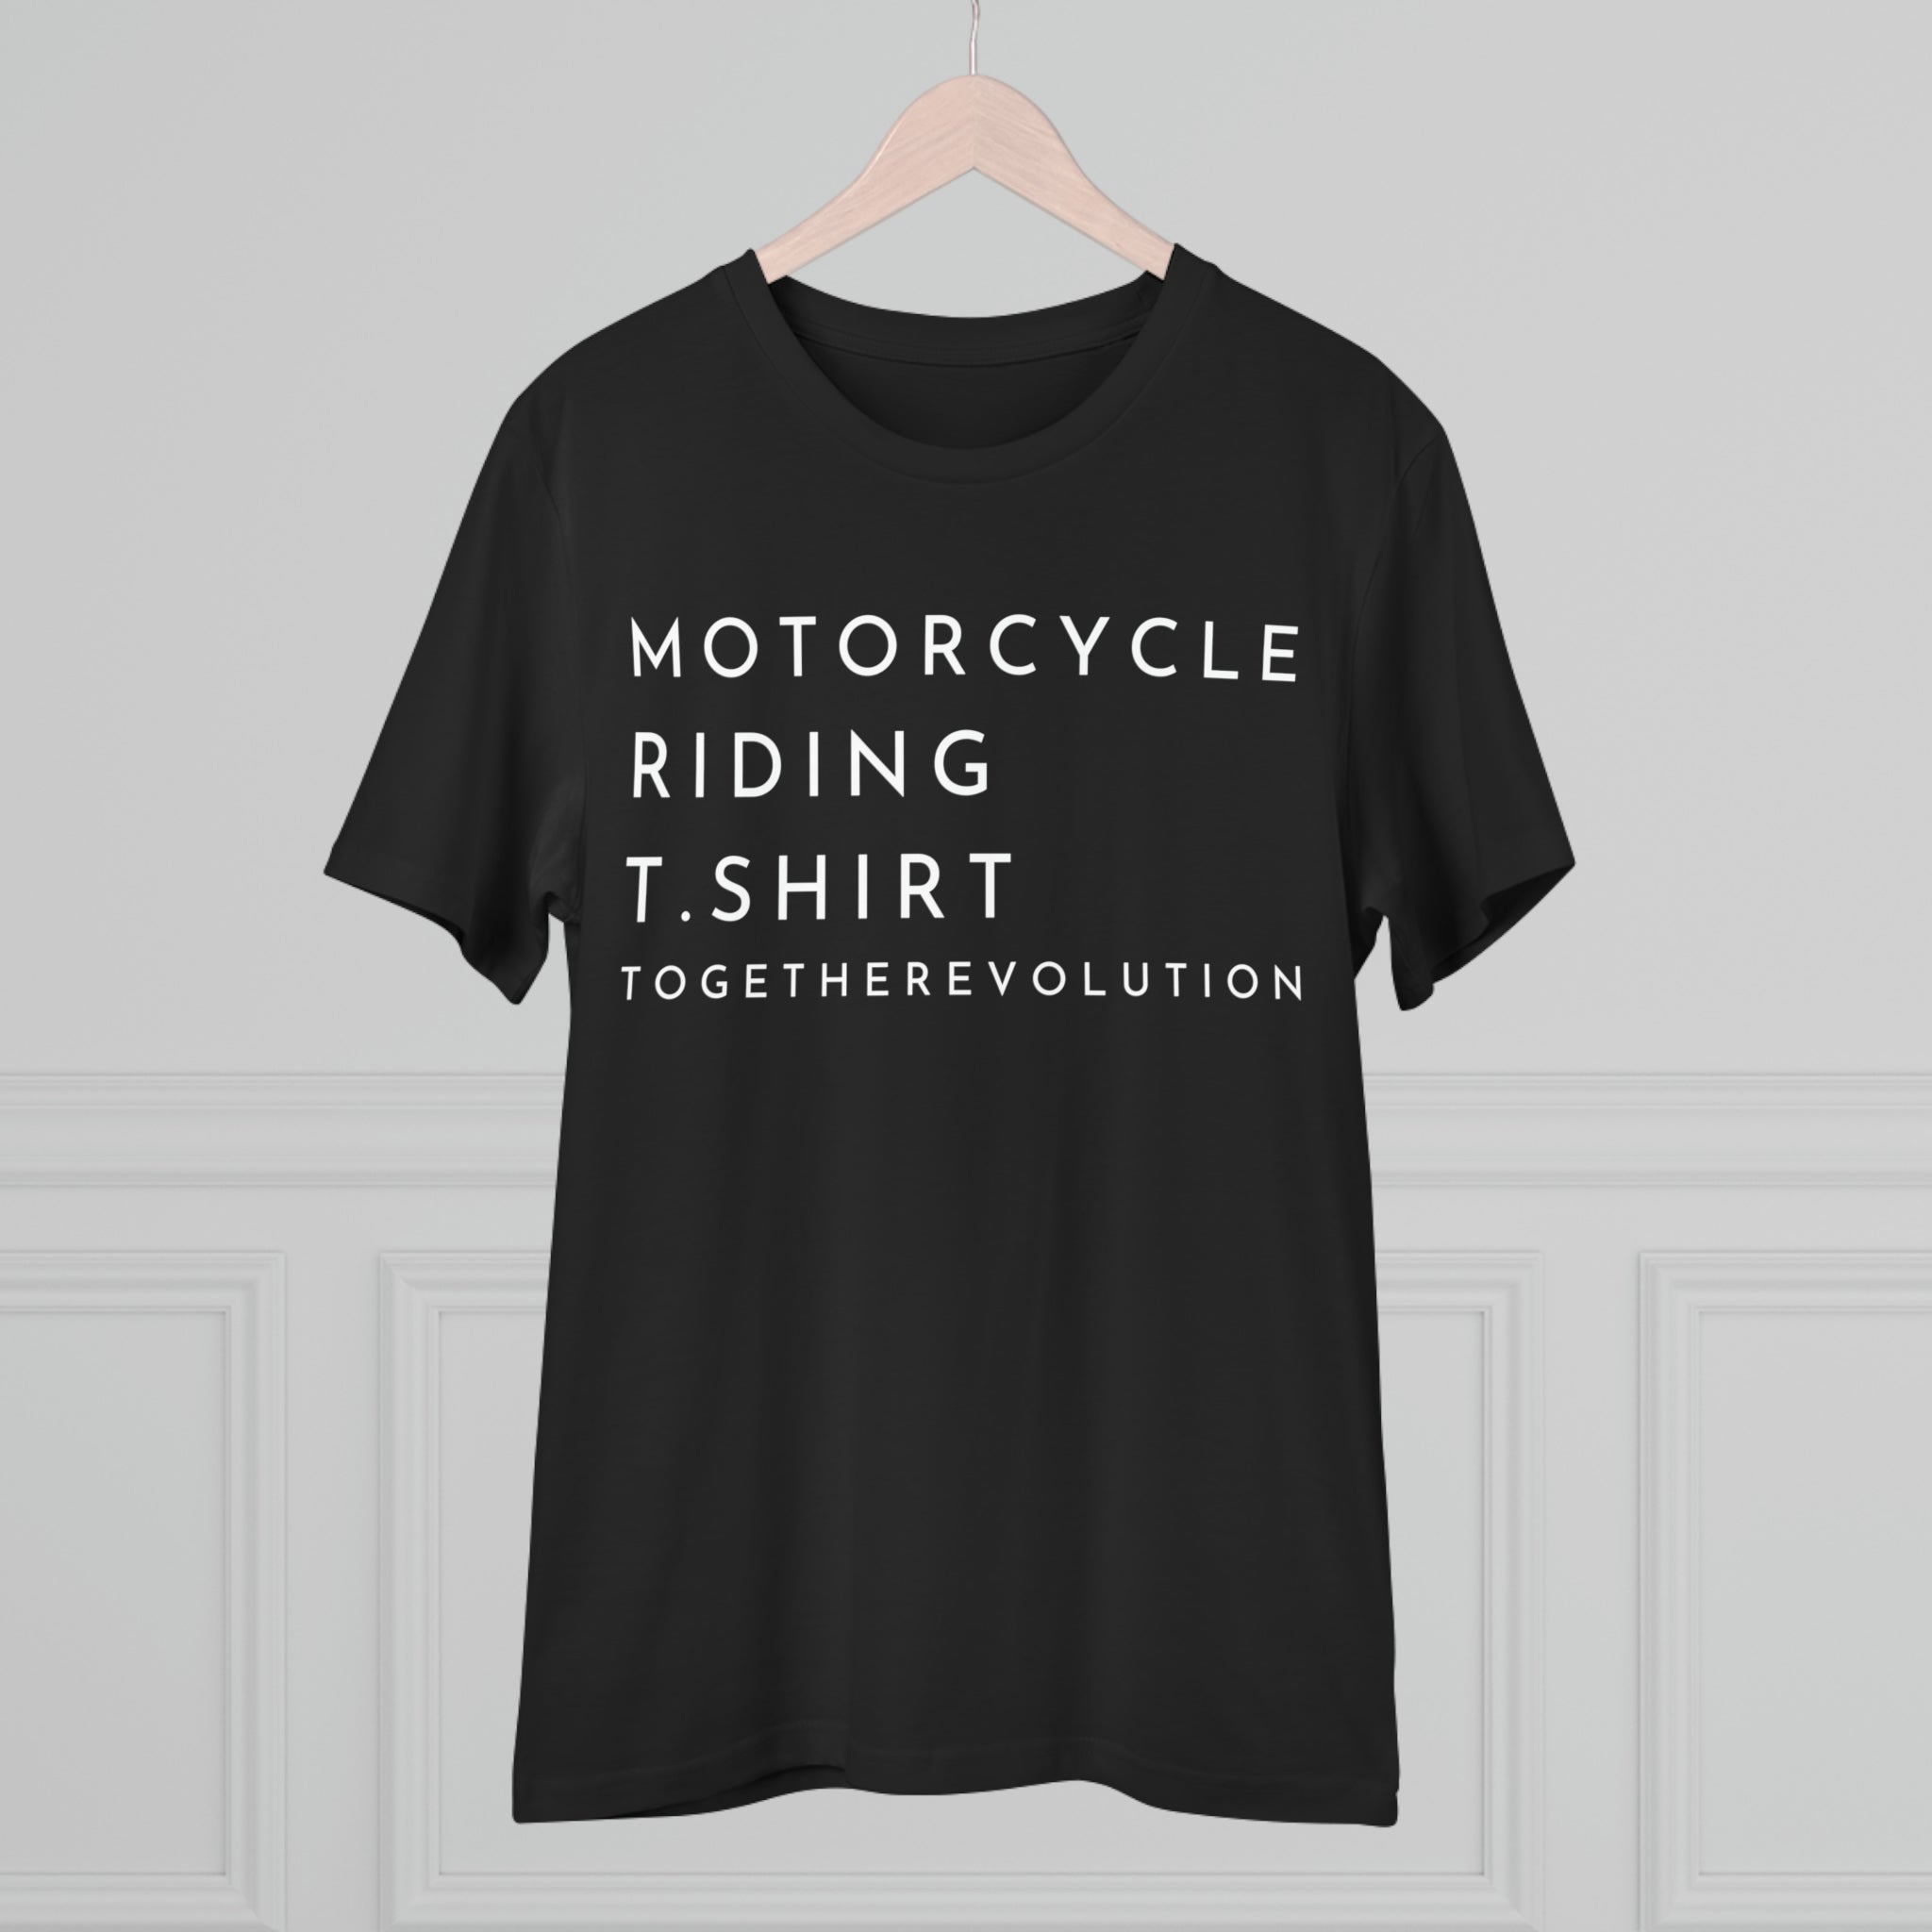 Motorcycle Riding T-Shirt